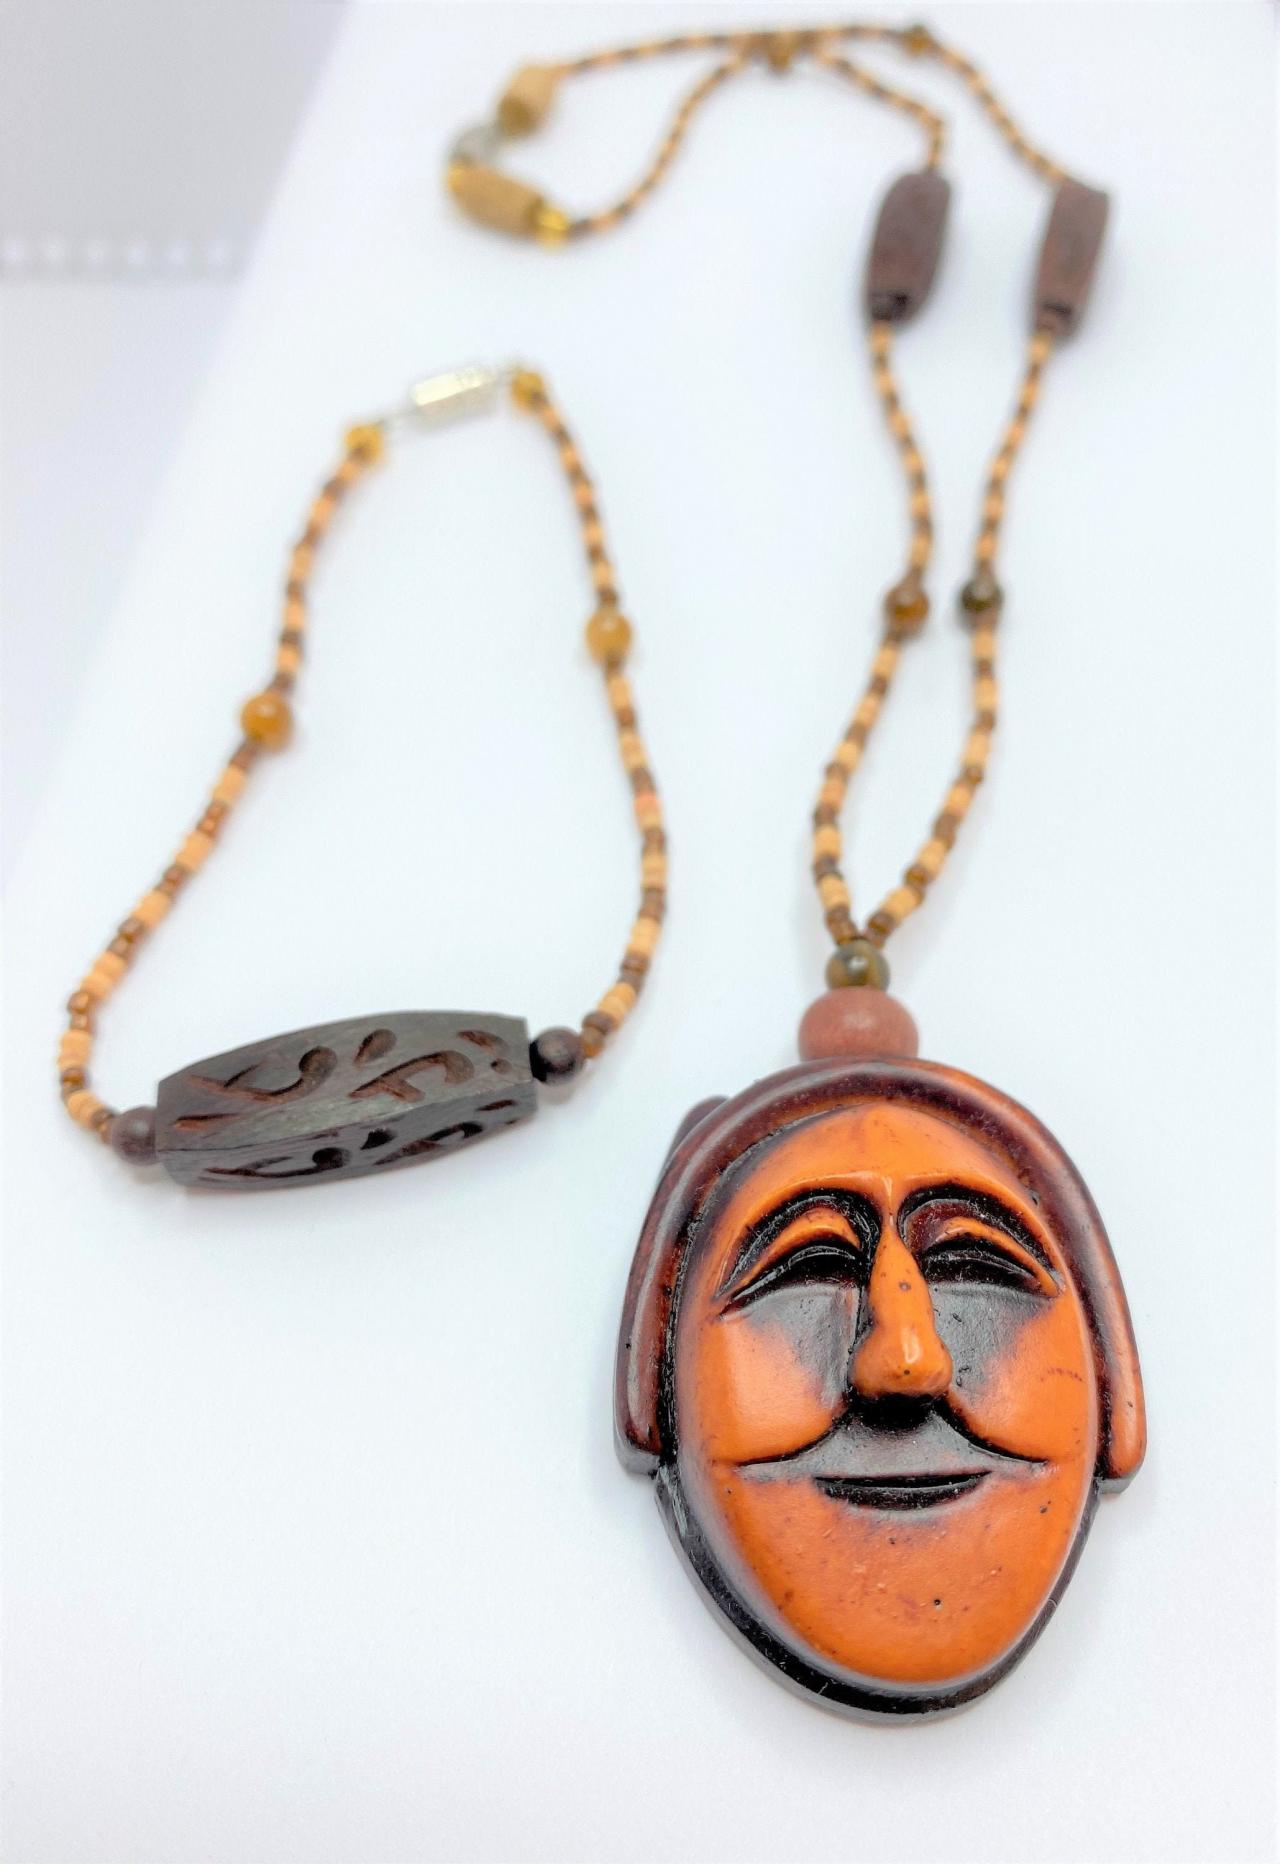 Handmade Necklace And Bracelet Set, Carved Wood / Bead ( With Tigers Eye) Handmade; Necklace 18" And Bracelet Is 6"